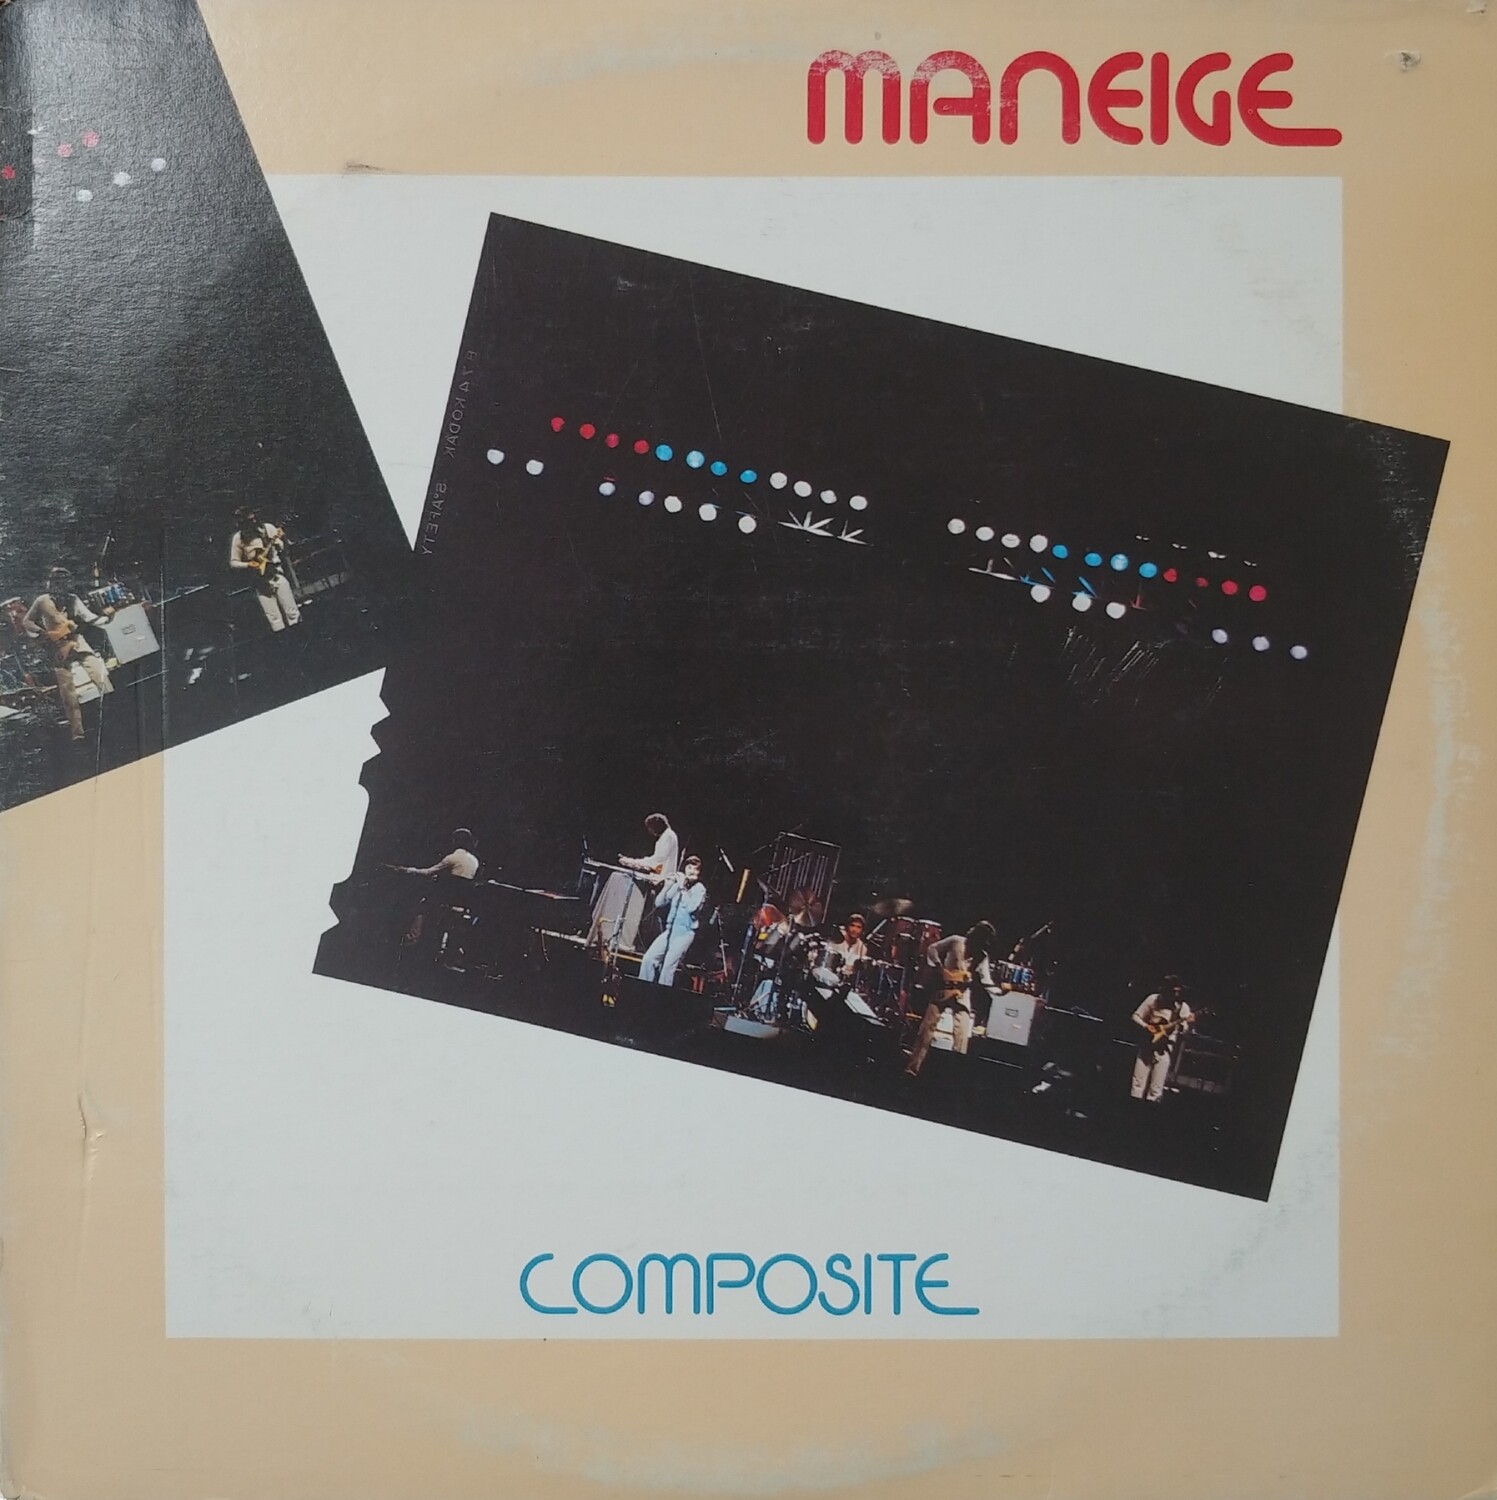 Maneige - Composite